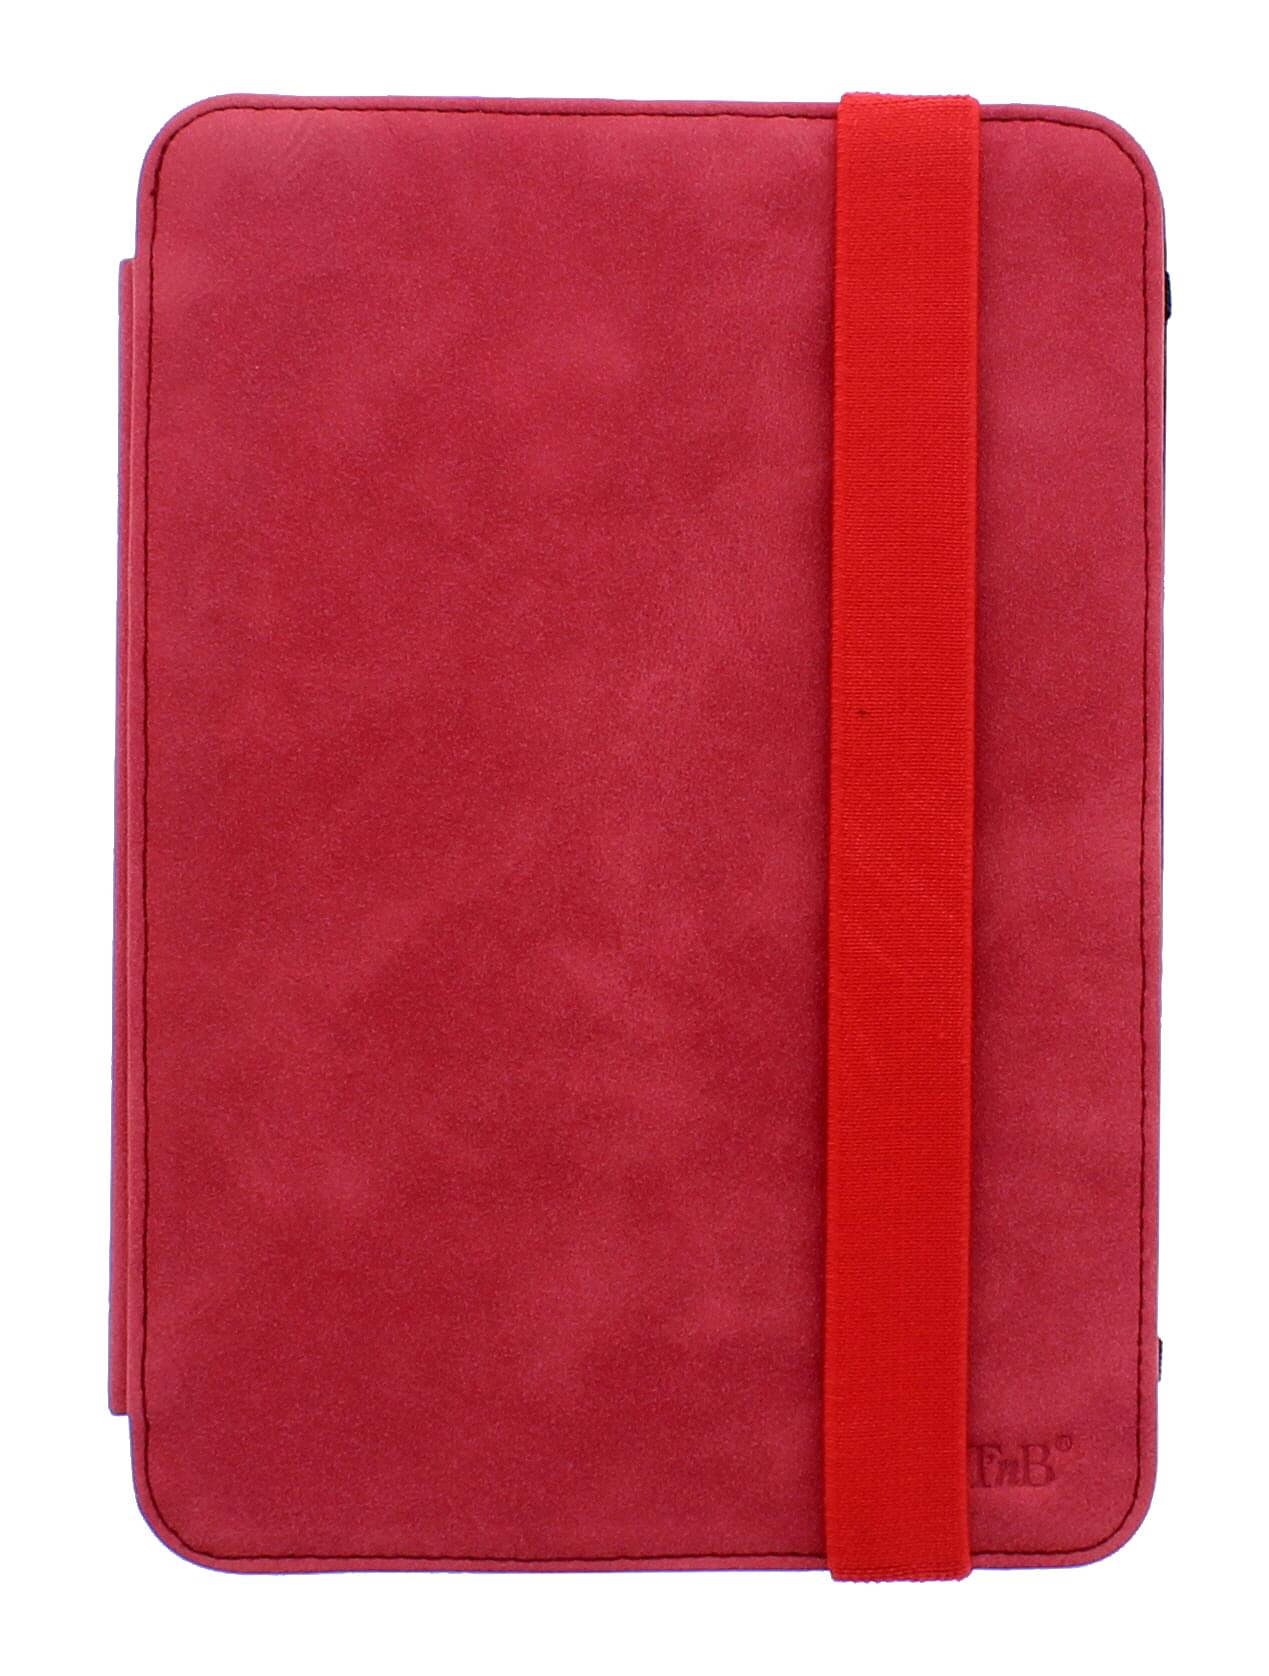 Accessoire tablette T'nB Sweet Etui Folio universel 7" Rouge